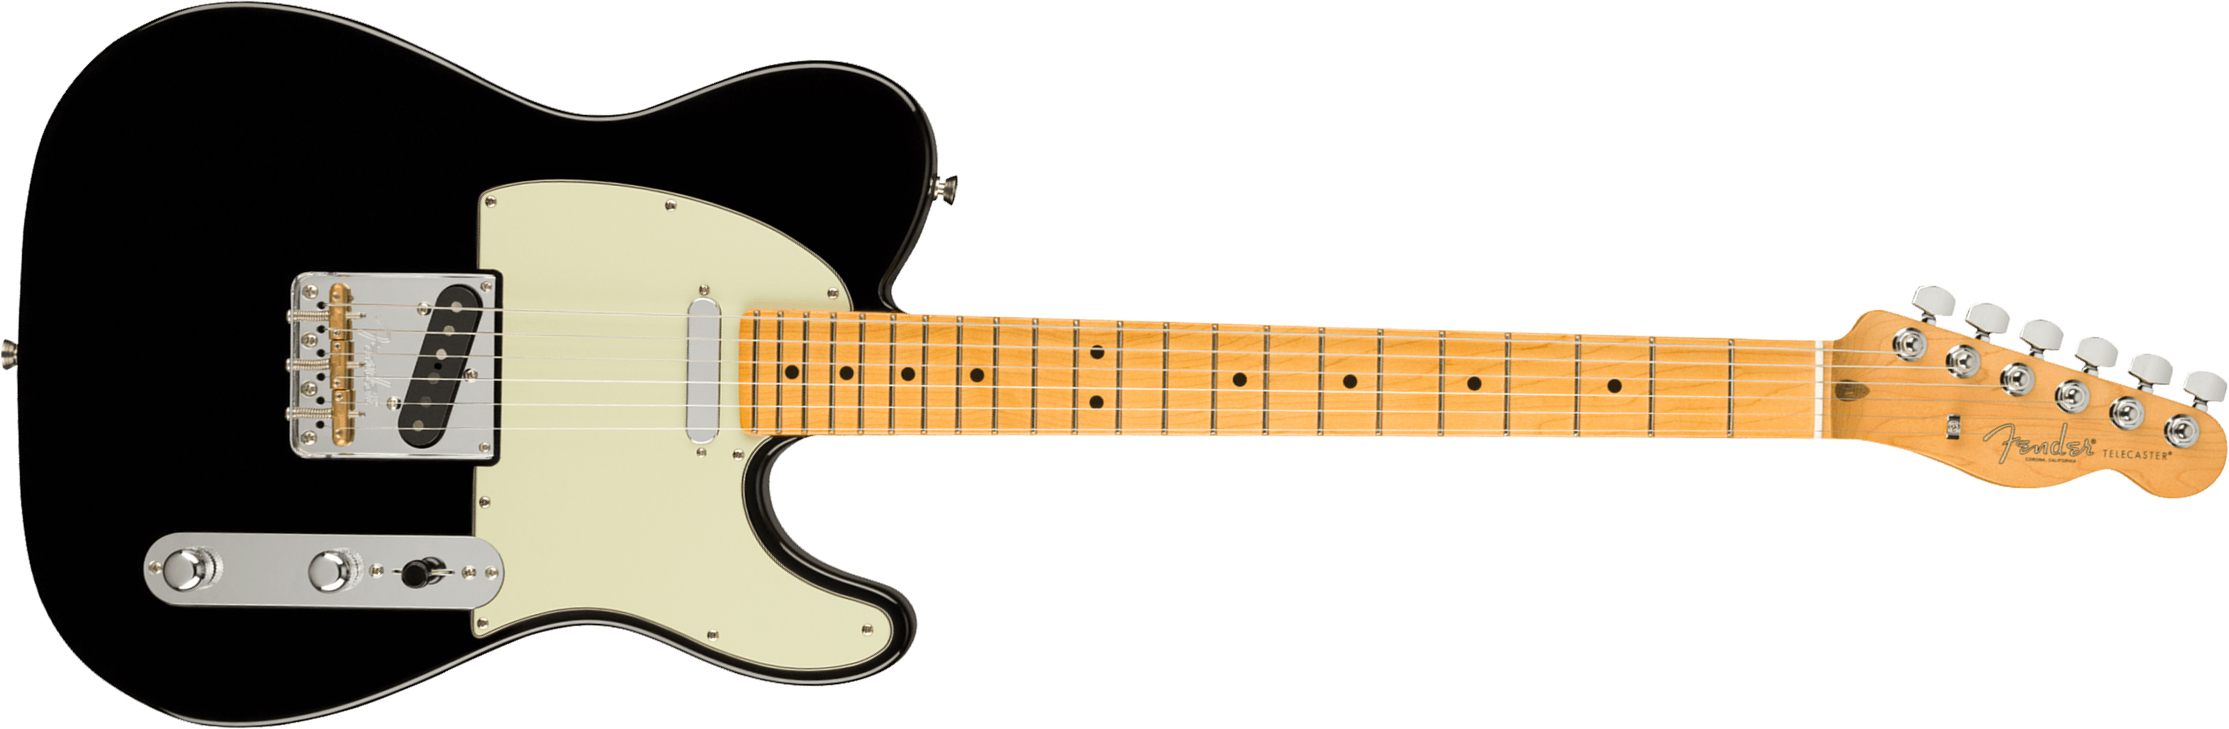 Fender Tele American Professional Ii Usa Mn - Black - Guitare Électrique Forme Tel - Main picture